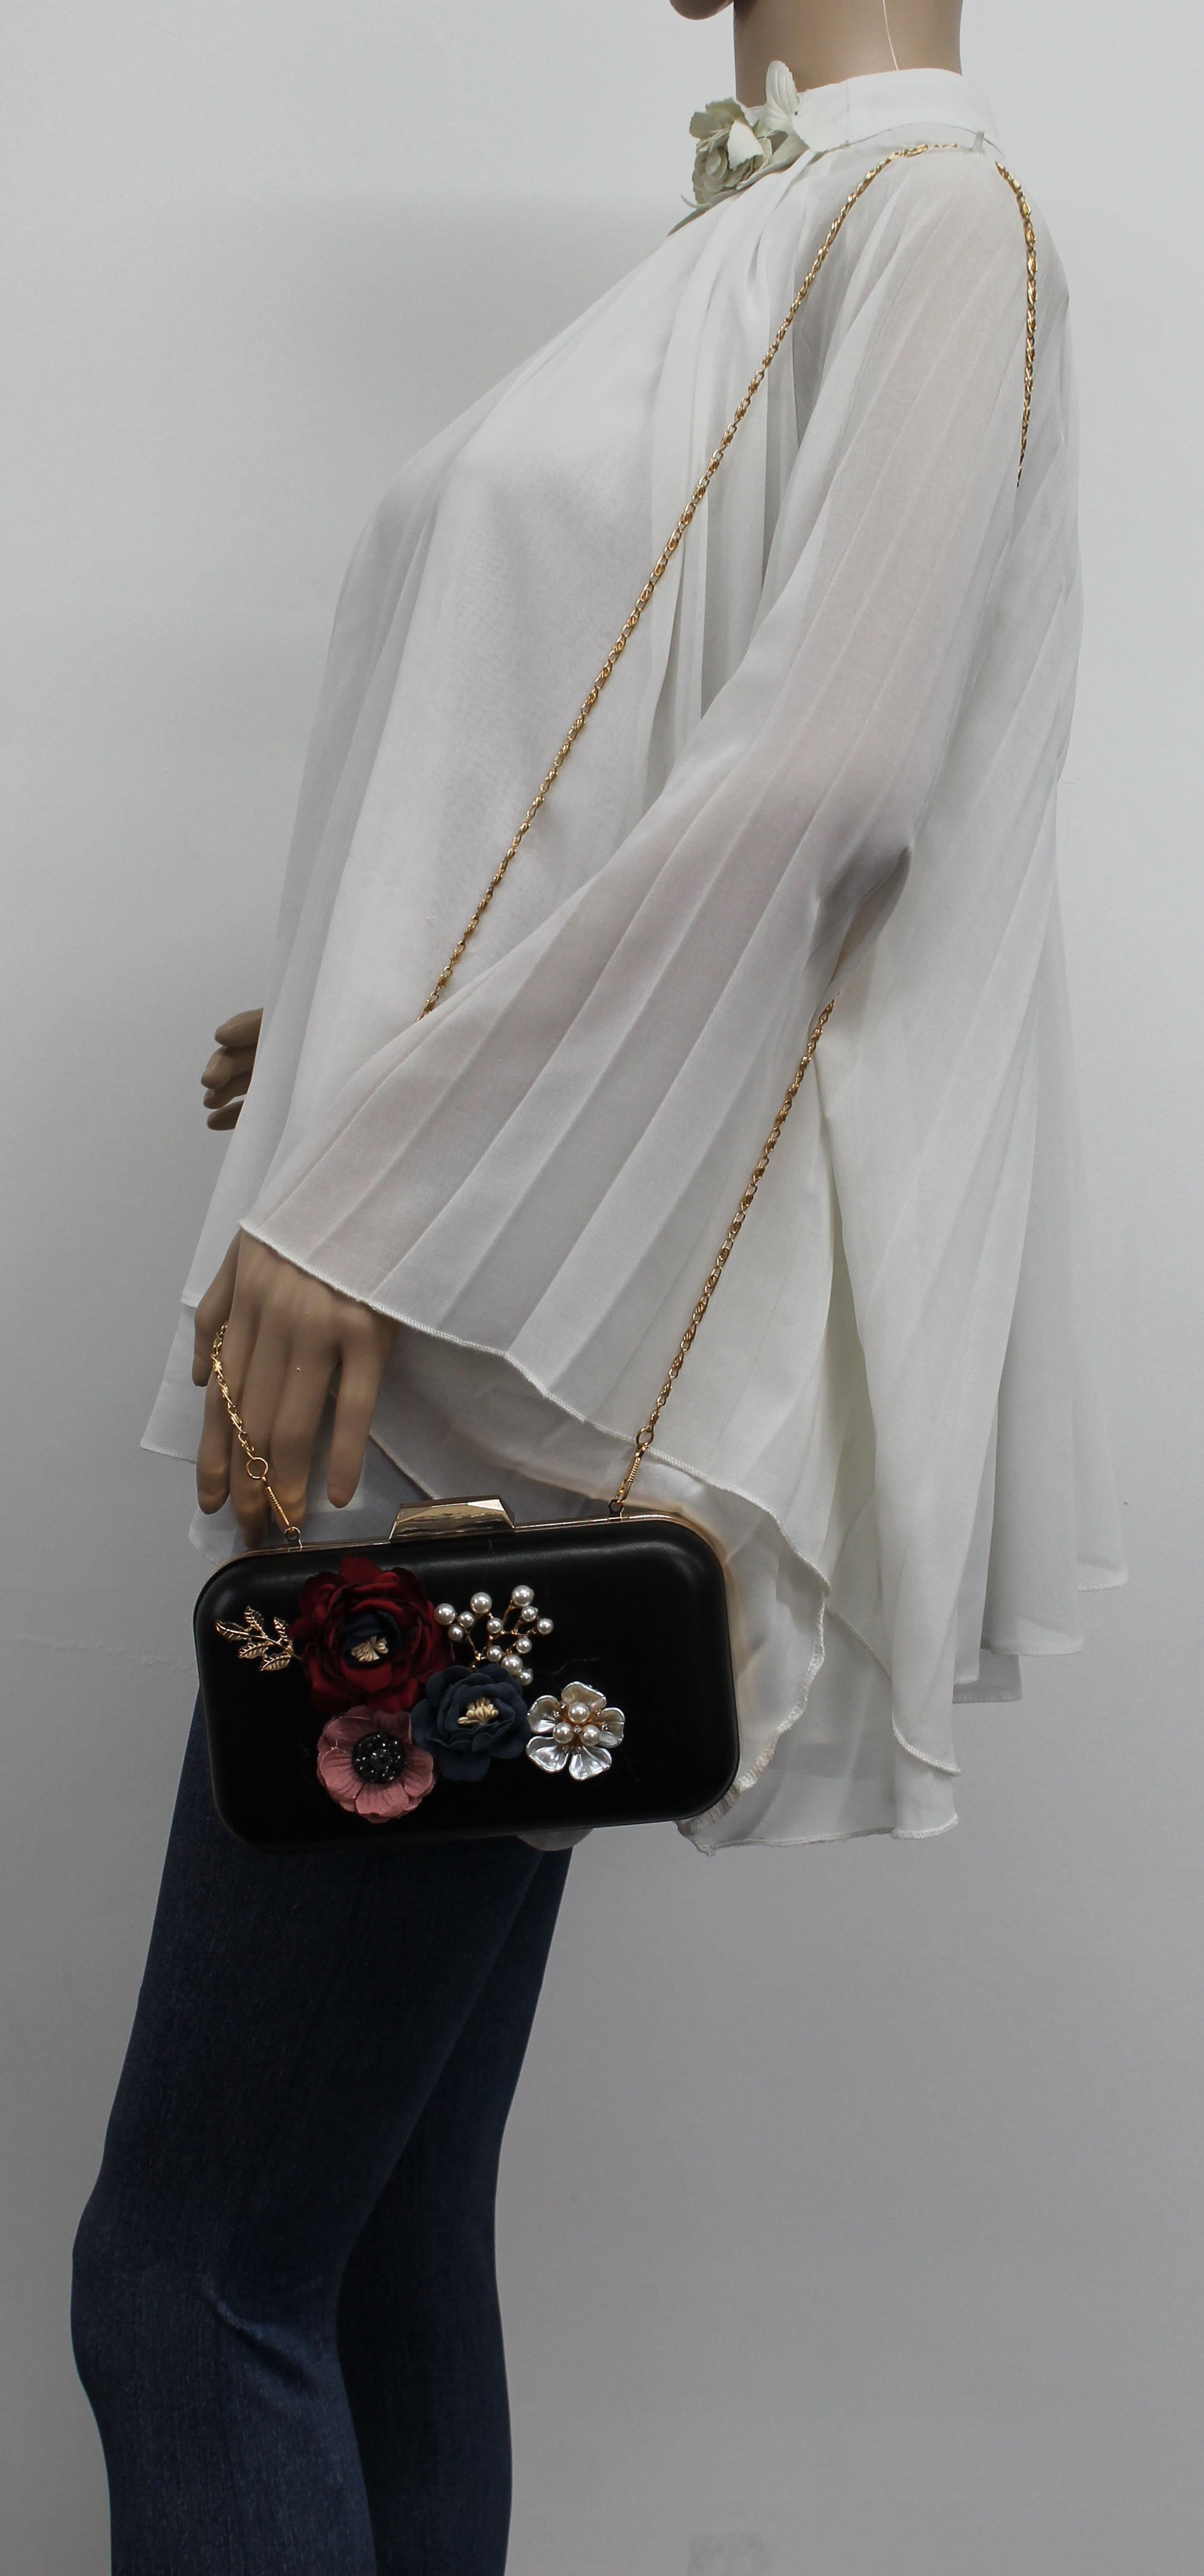 SWANKYSWANS Eliza Floral Clutch Bag Black Cute Cheap Clutch Bag For Weddings School and Work